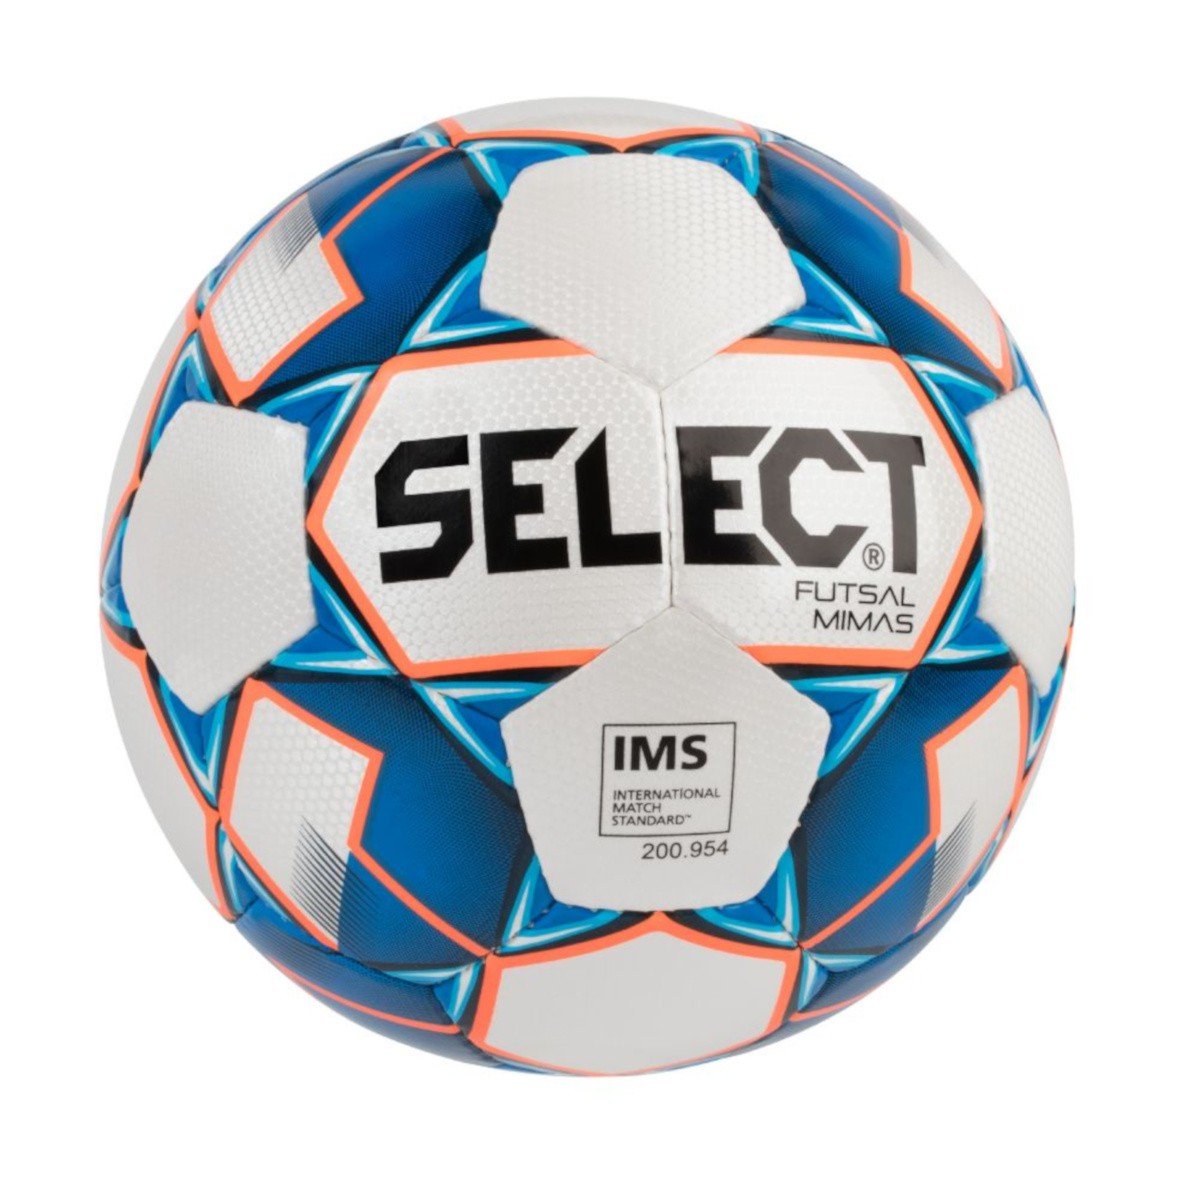 Select Piłka nożna halowa Futsal Mimas IMS